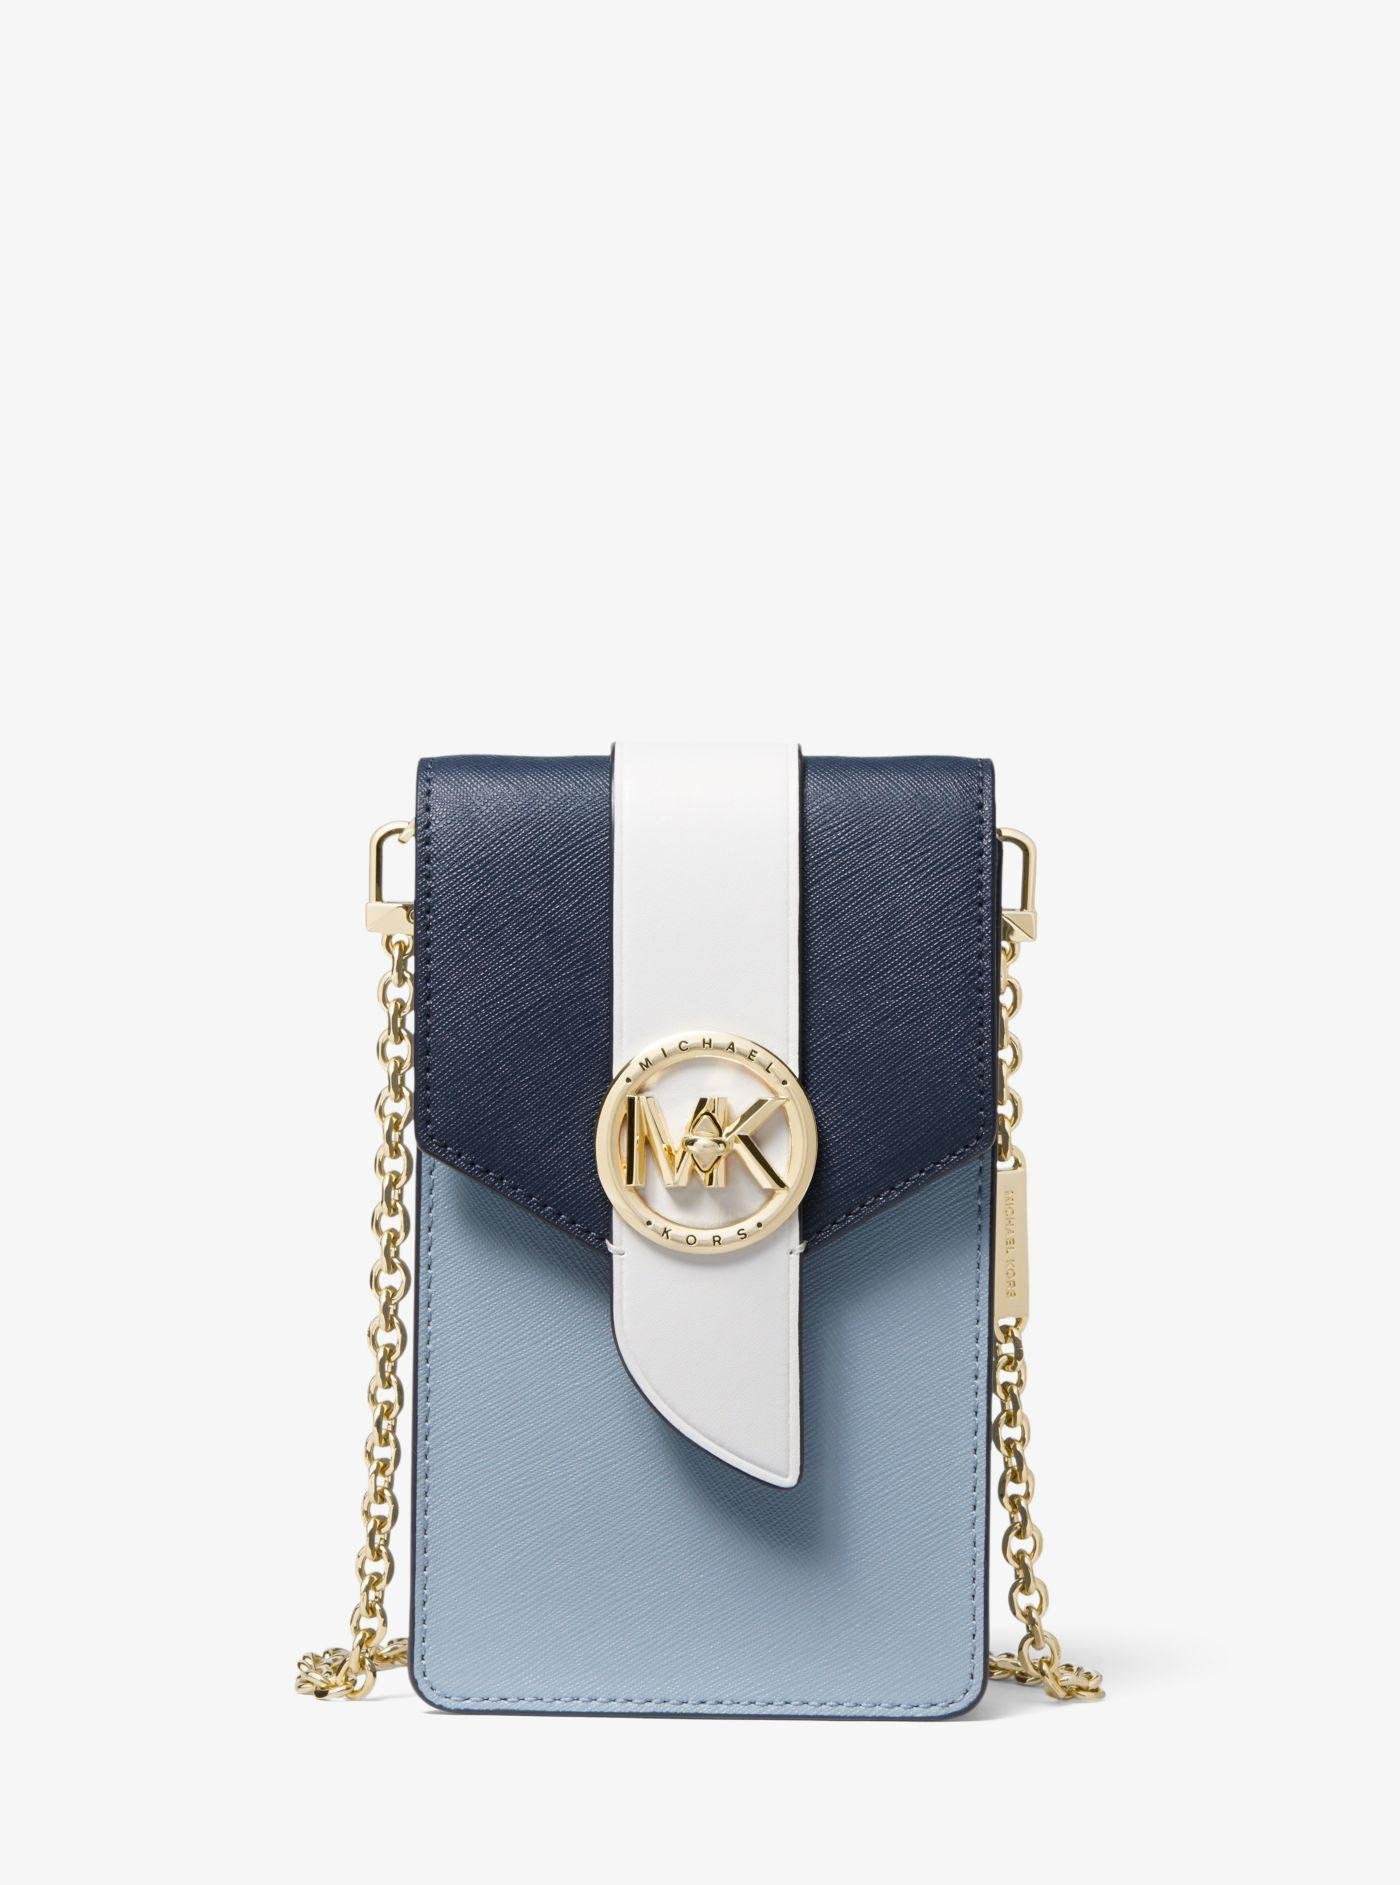 Michael Kors Small Tri-color Saffiano Leather Smartphone Crossbody Bag ...